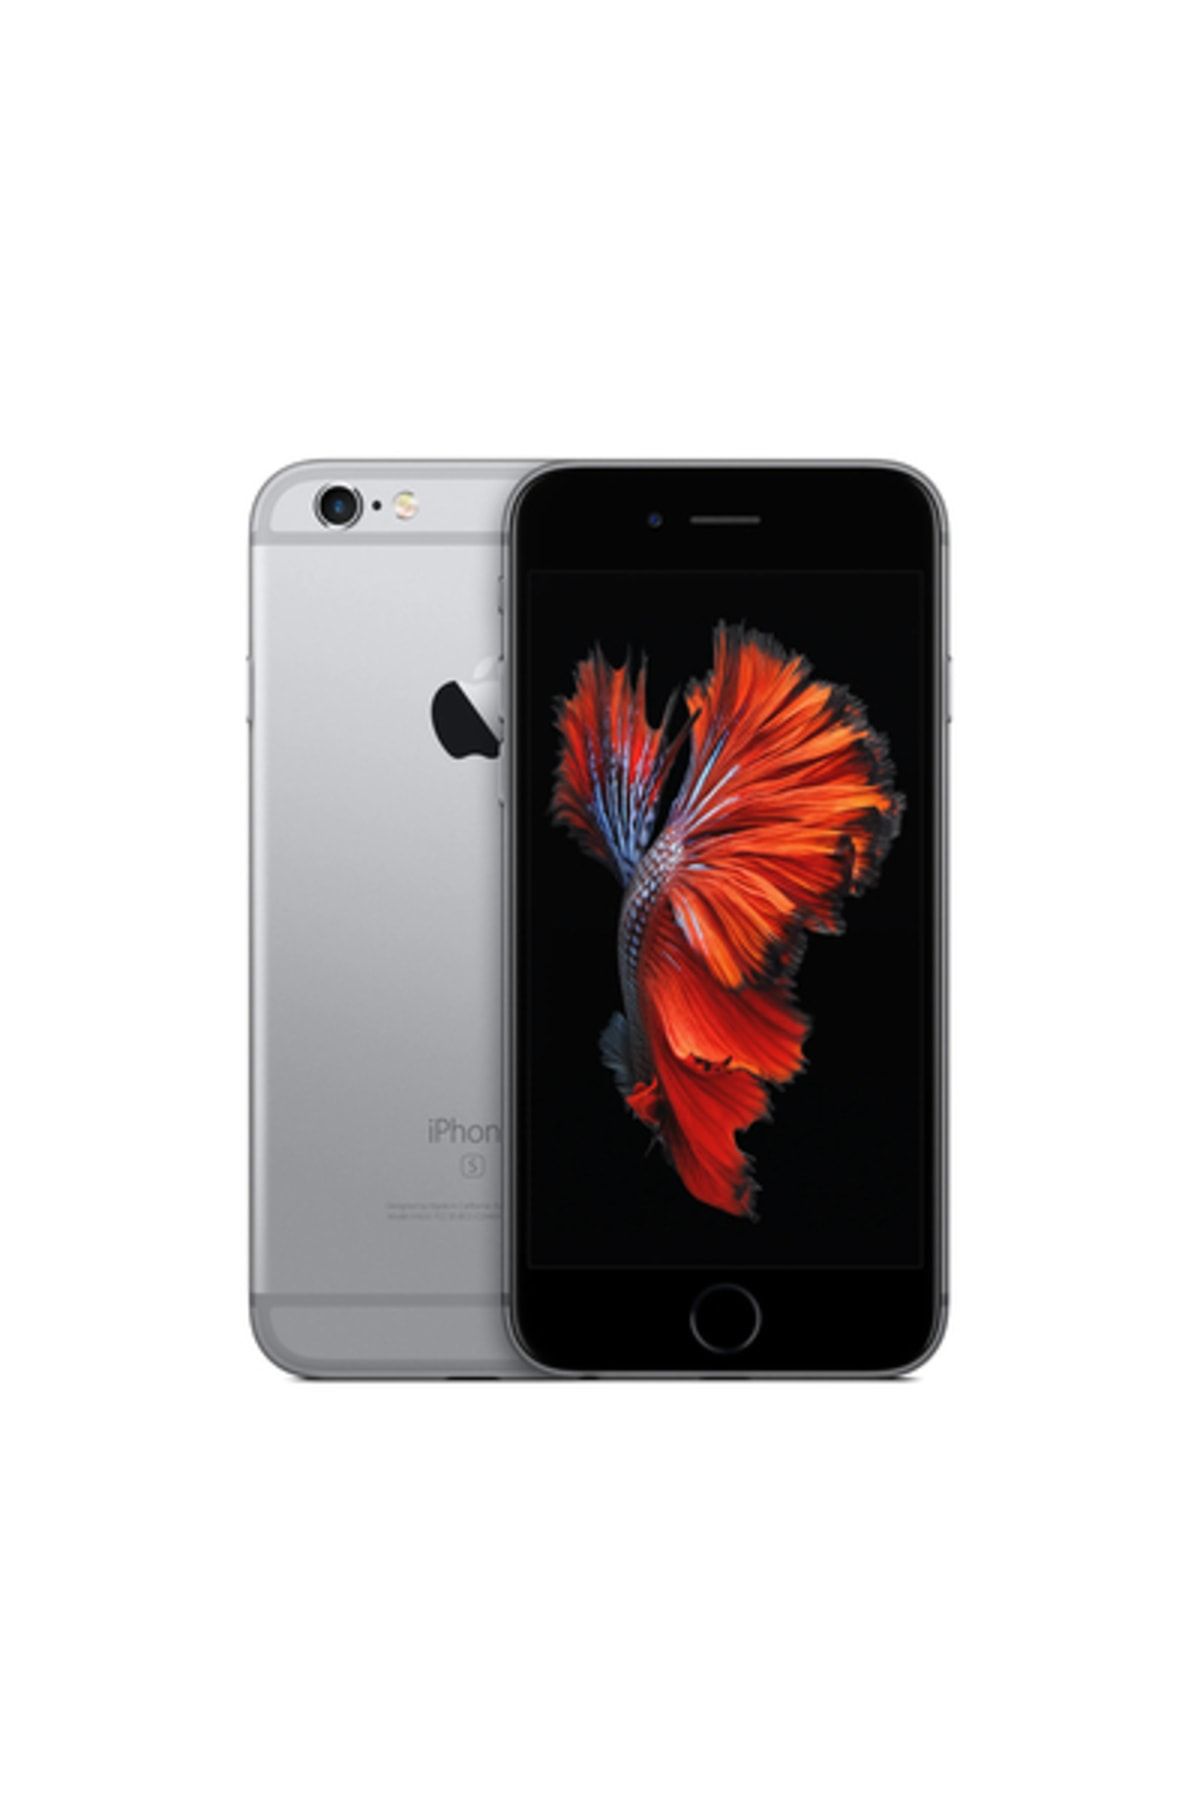 Apple Yenilenmiş iPhone 6s Plus 64 GB Uzay Grisi 64 GB Uzay Grisi A Grade